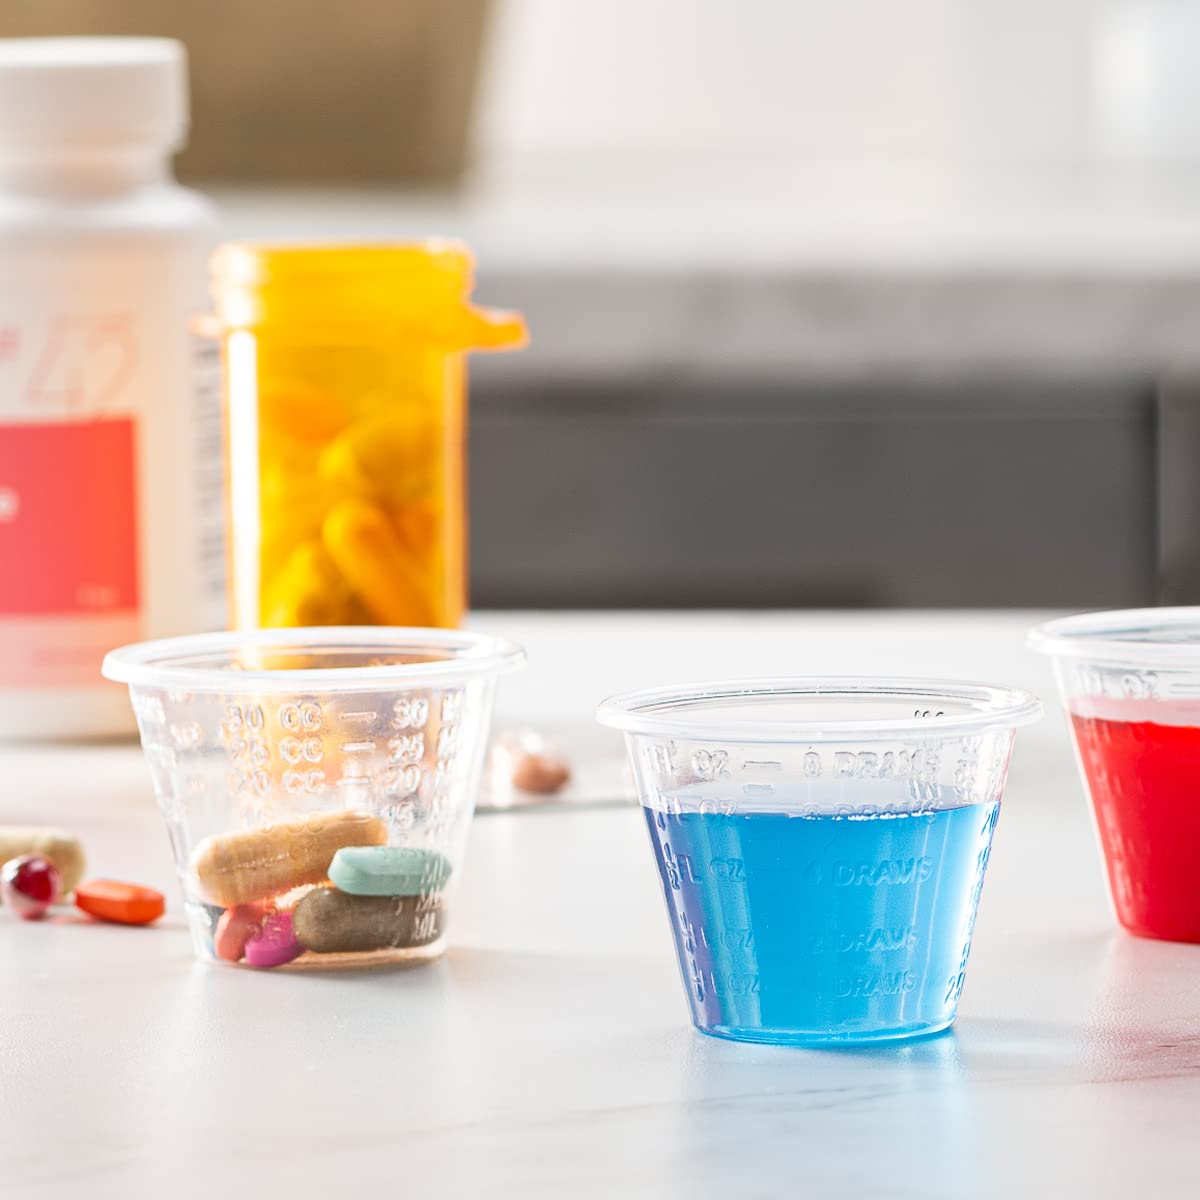 [100 Count - 1 oz.] Plastic Disposable Medicine Measuring Cup for Liquid Medicine, Epoxy, & Pills